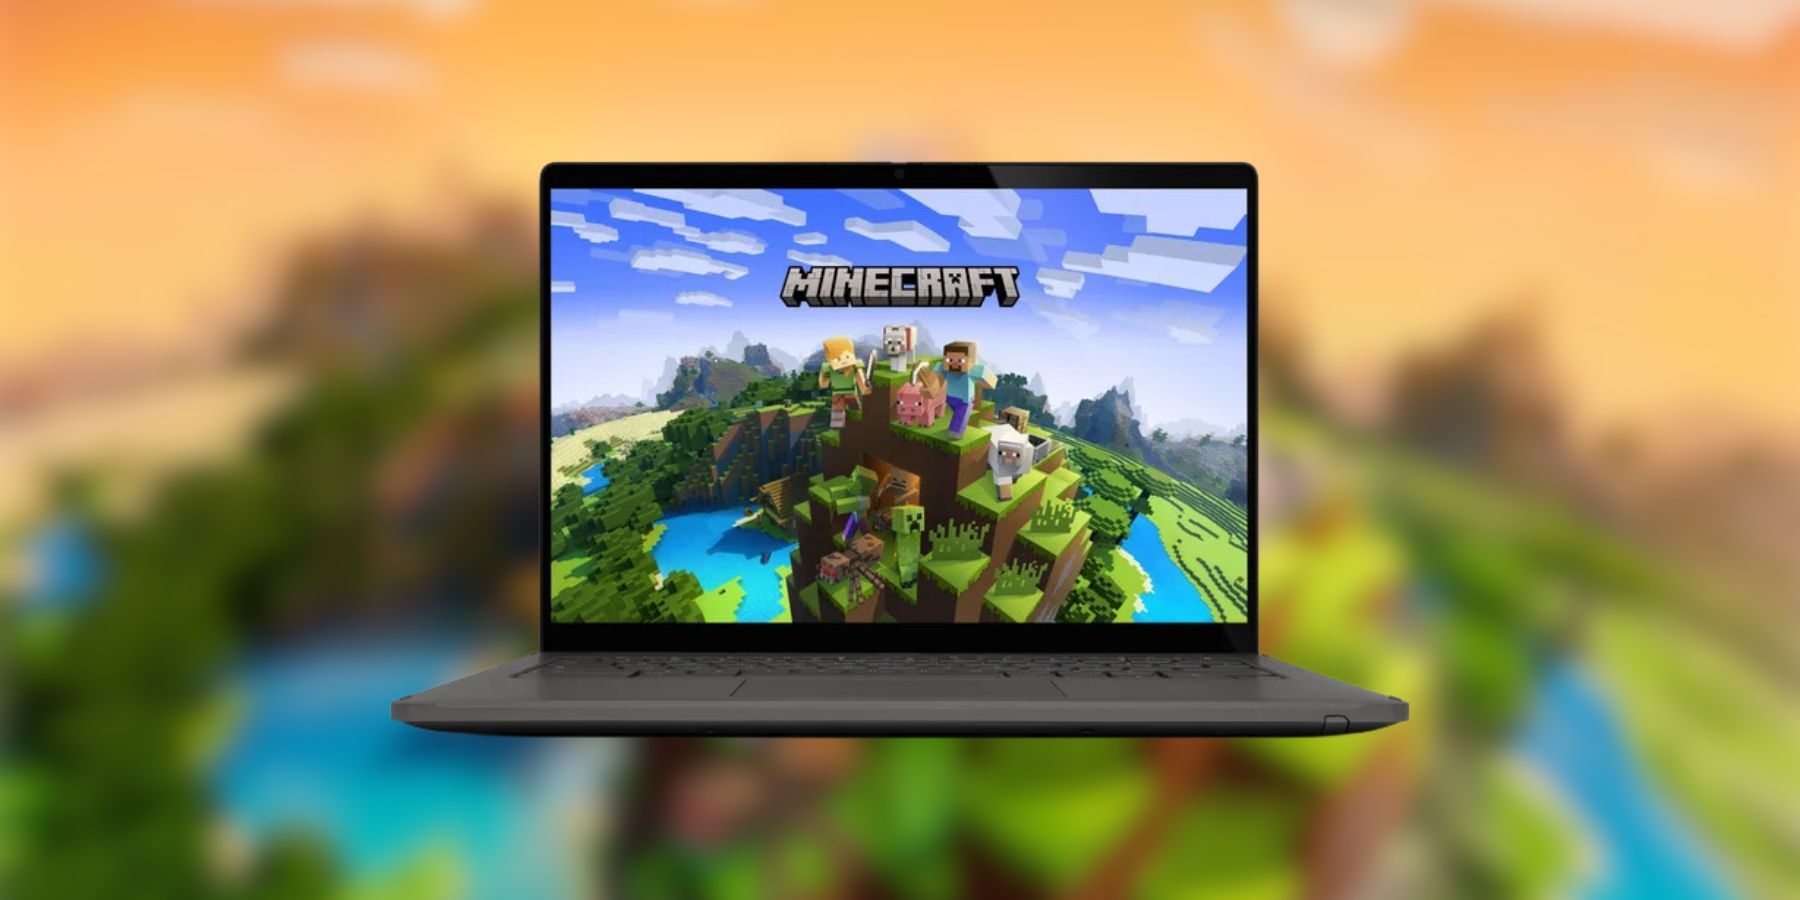 Minecraft Running on Chromebook